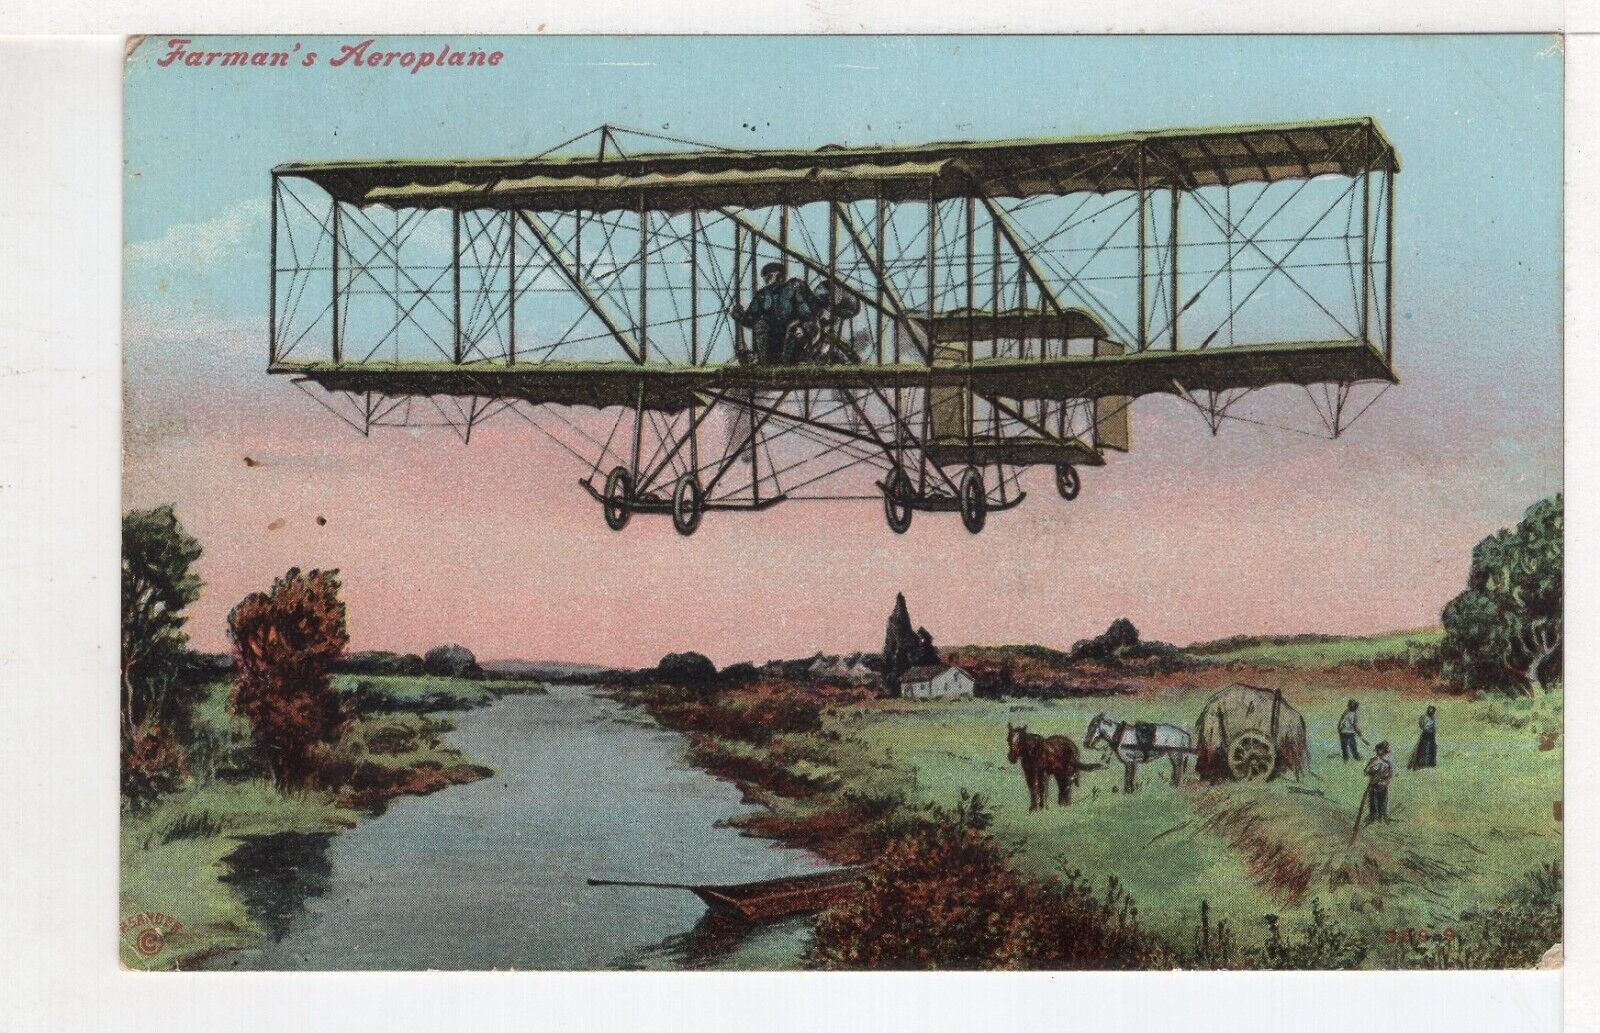 Aviation Postcard 1911 Farman\'s Aeroplane Airplane Plymouth IN to Chicago IL